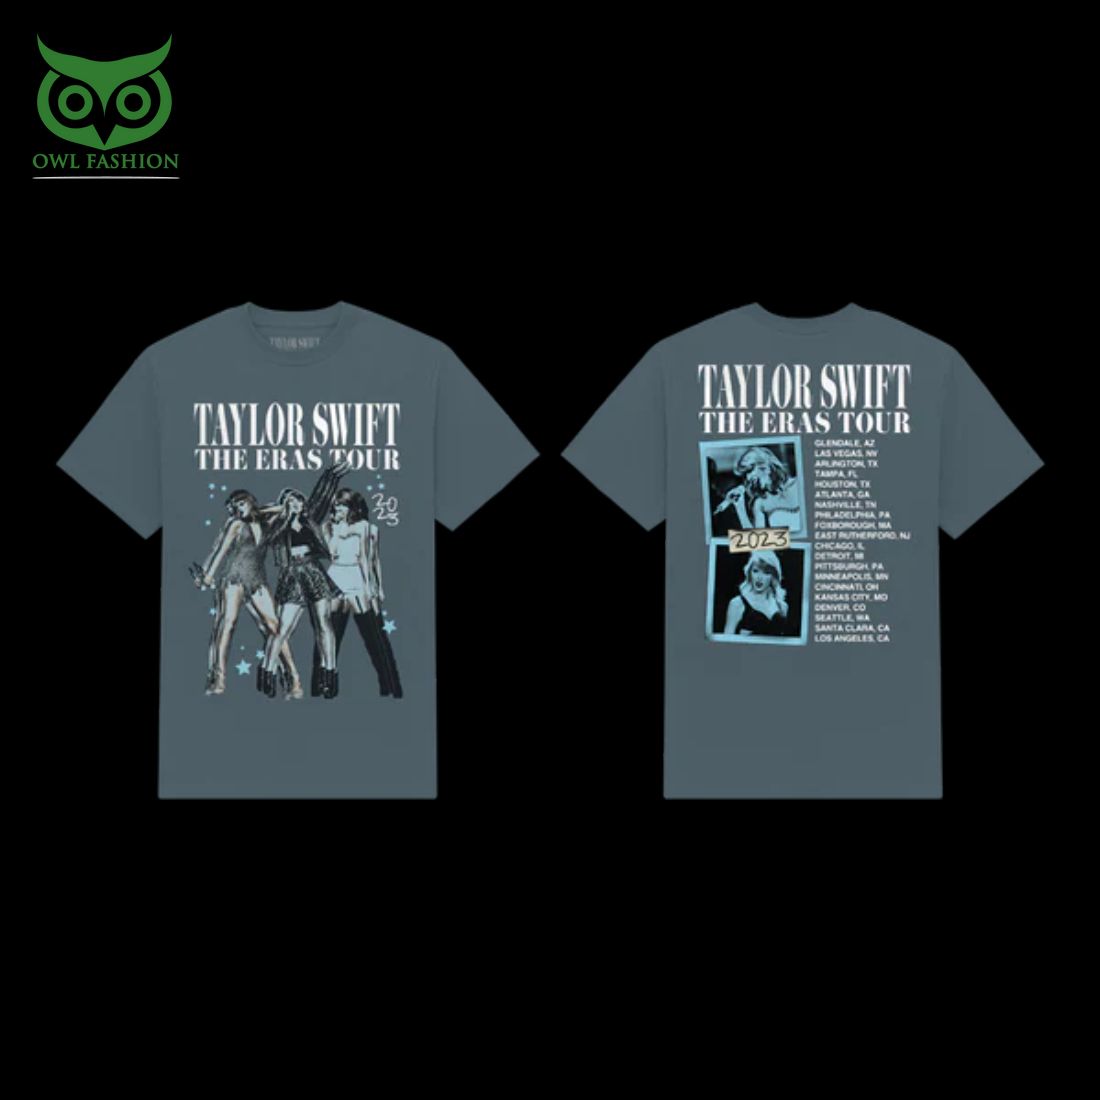 Taylor Swift The Eras Tour 1989 Album T Shirt Nice shot bro